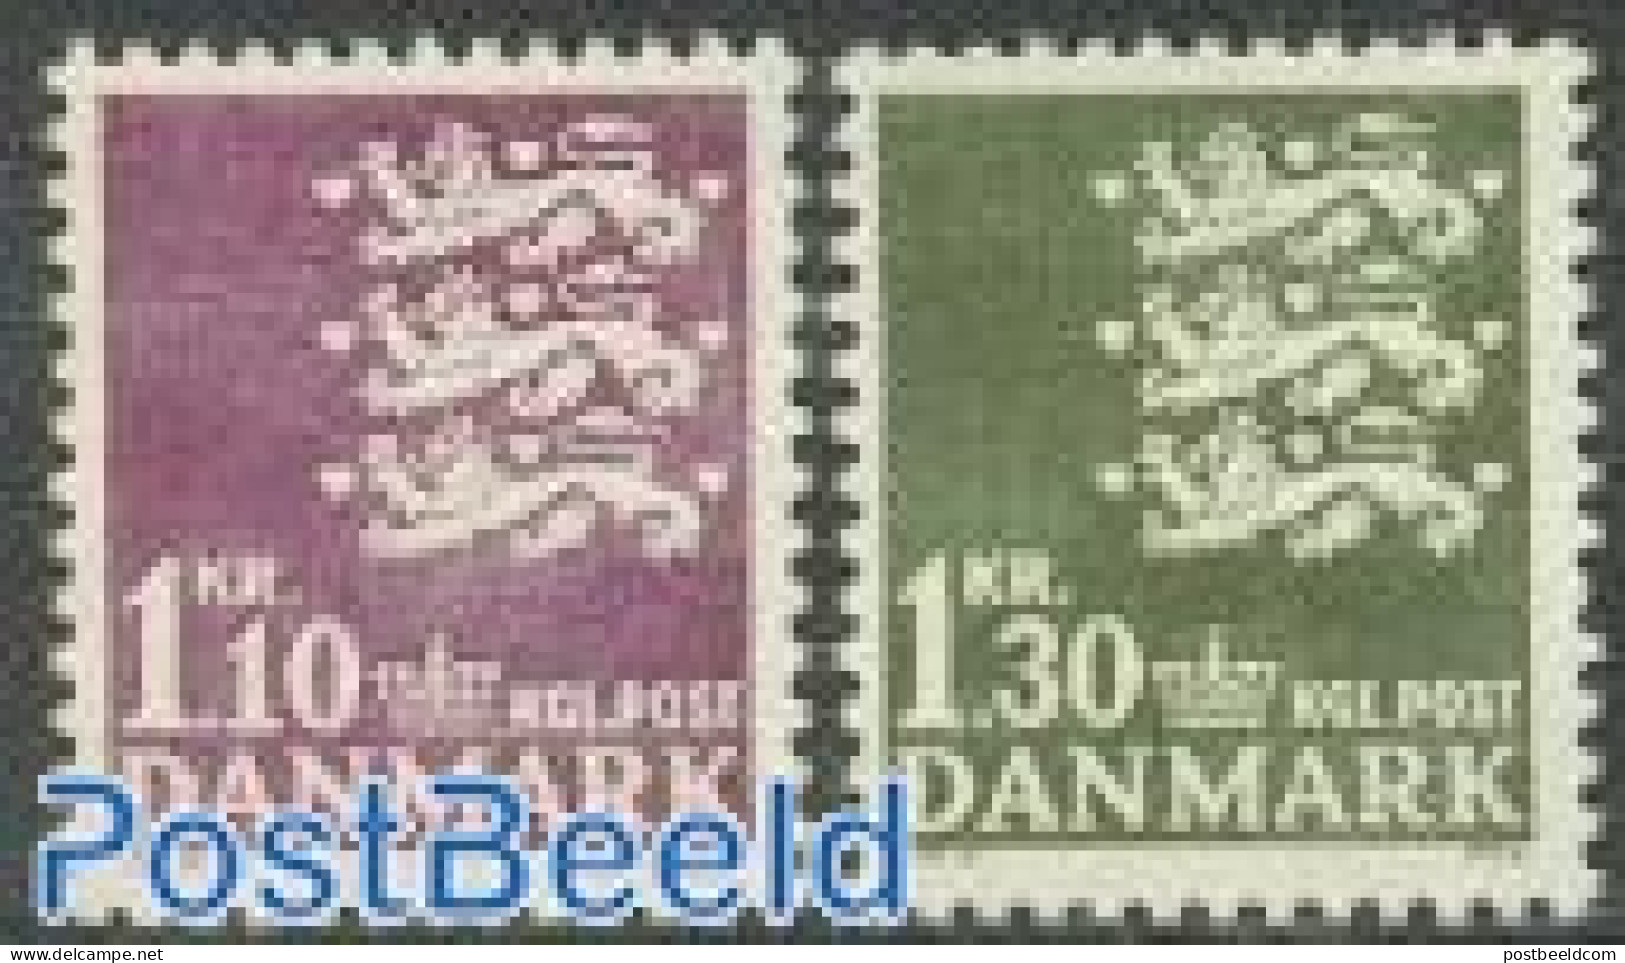 Denmark 1965 Definitives 2v, Mint NH - Neufs